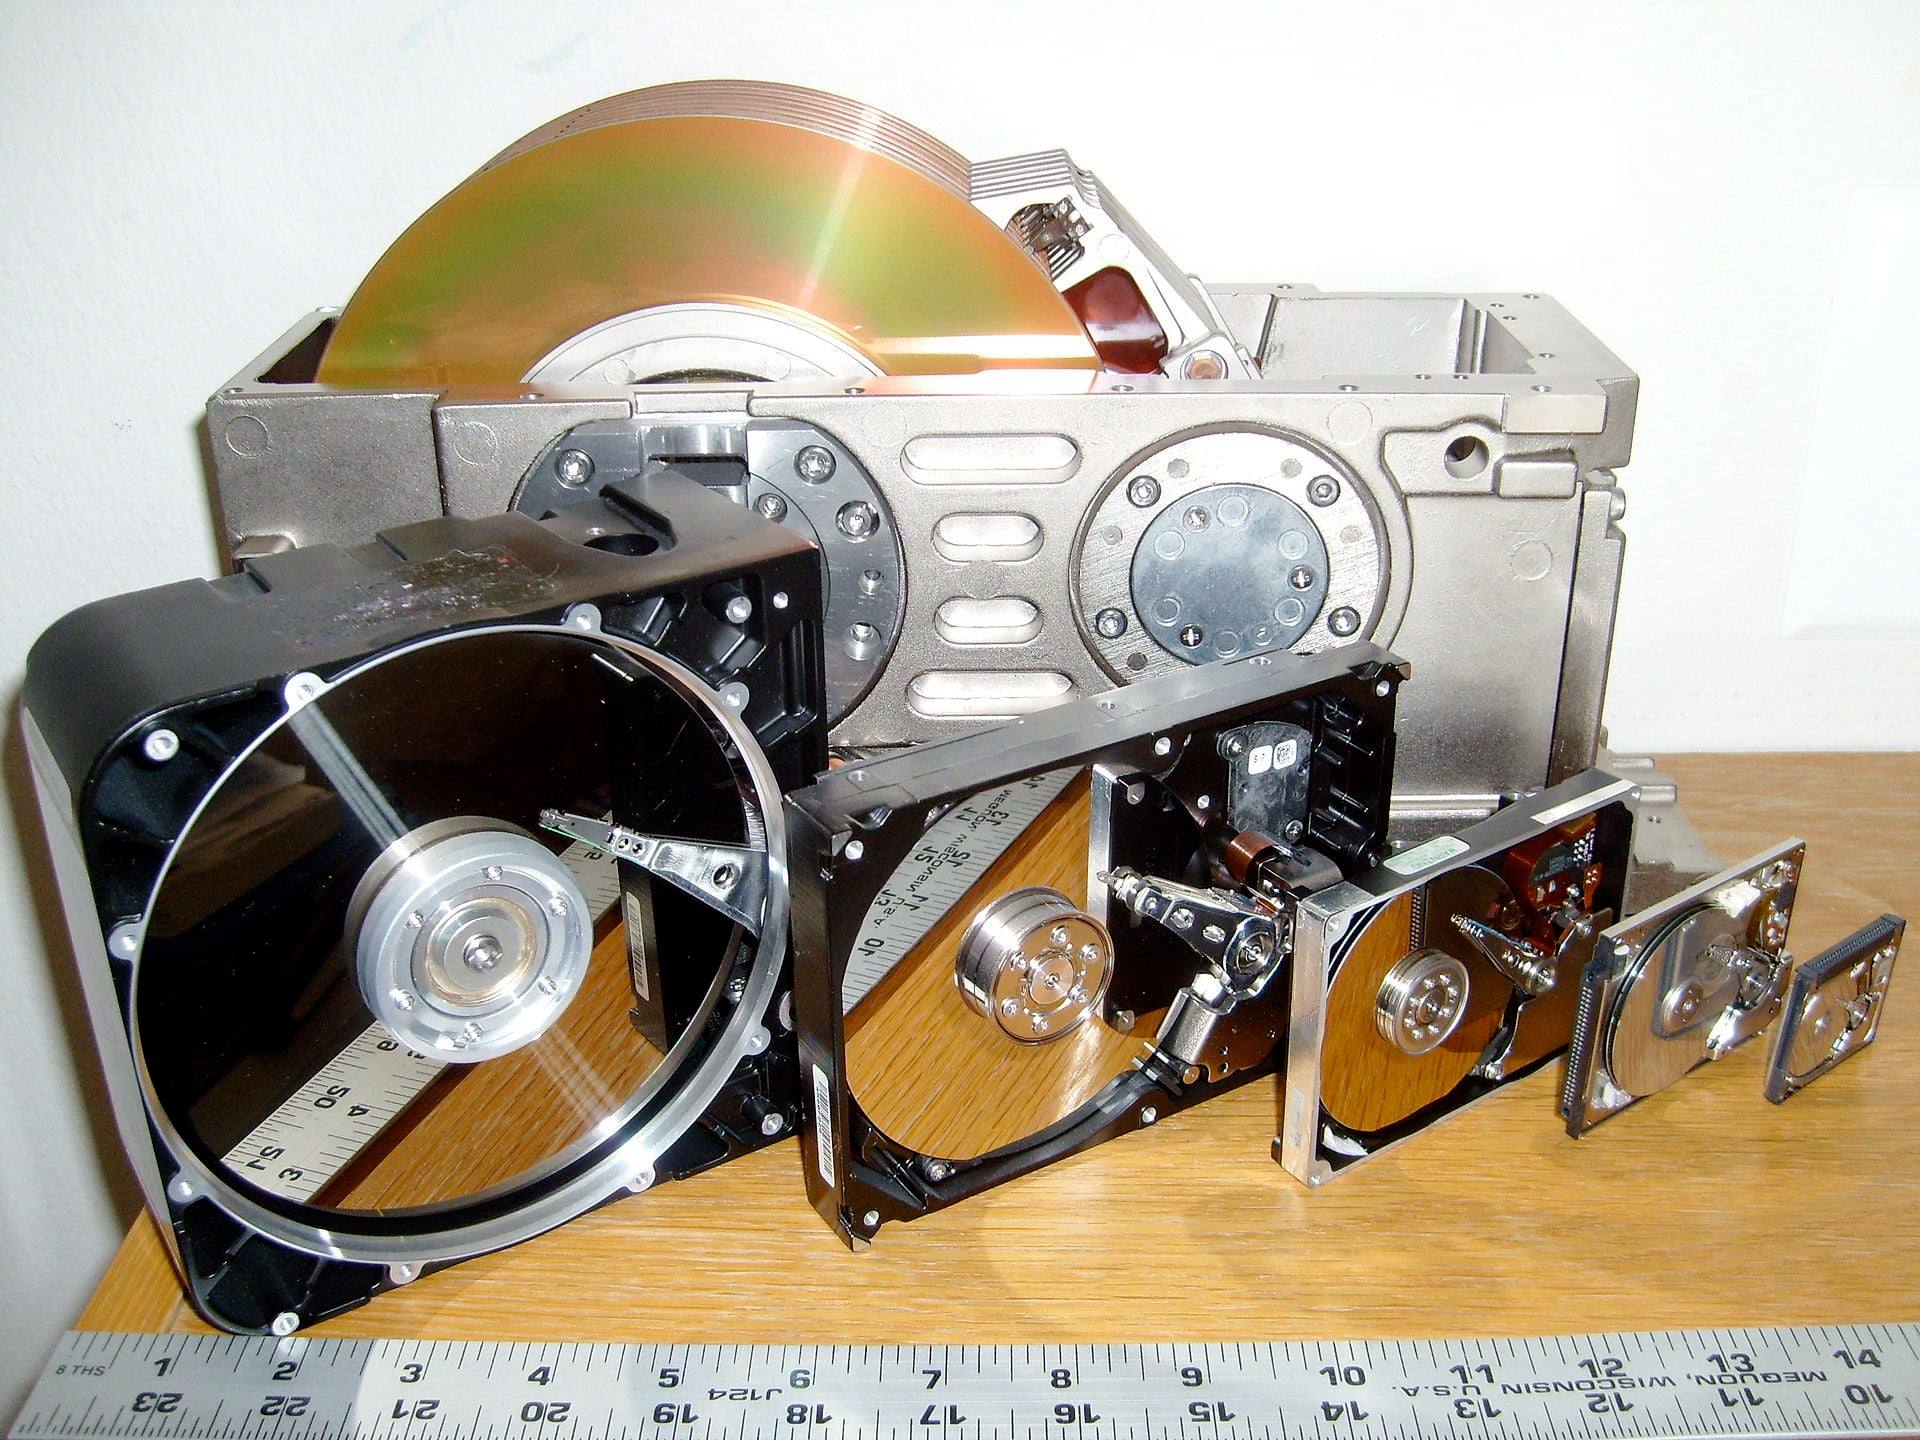 multiple hard drives